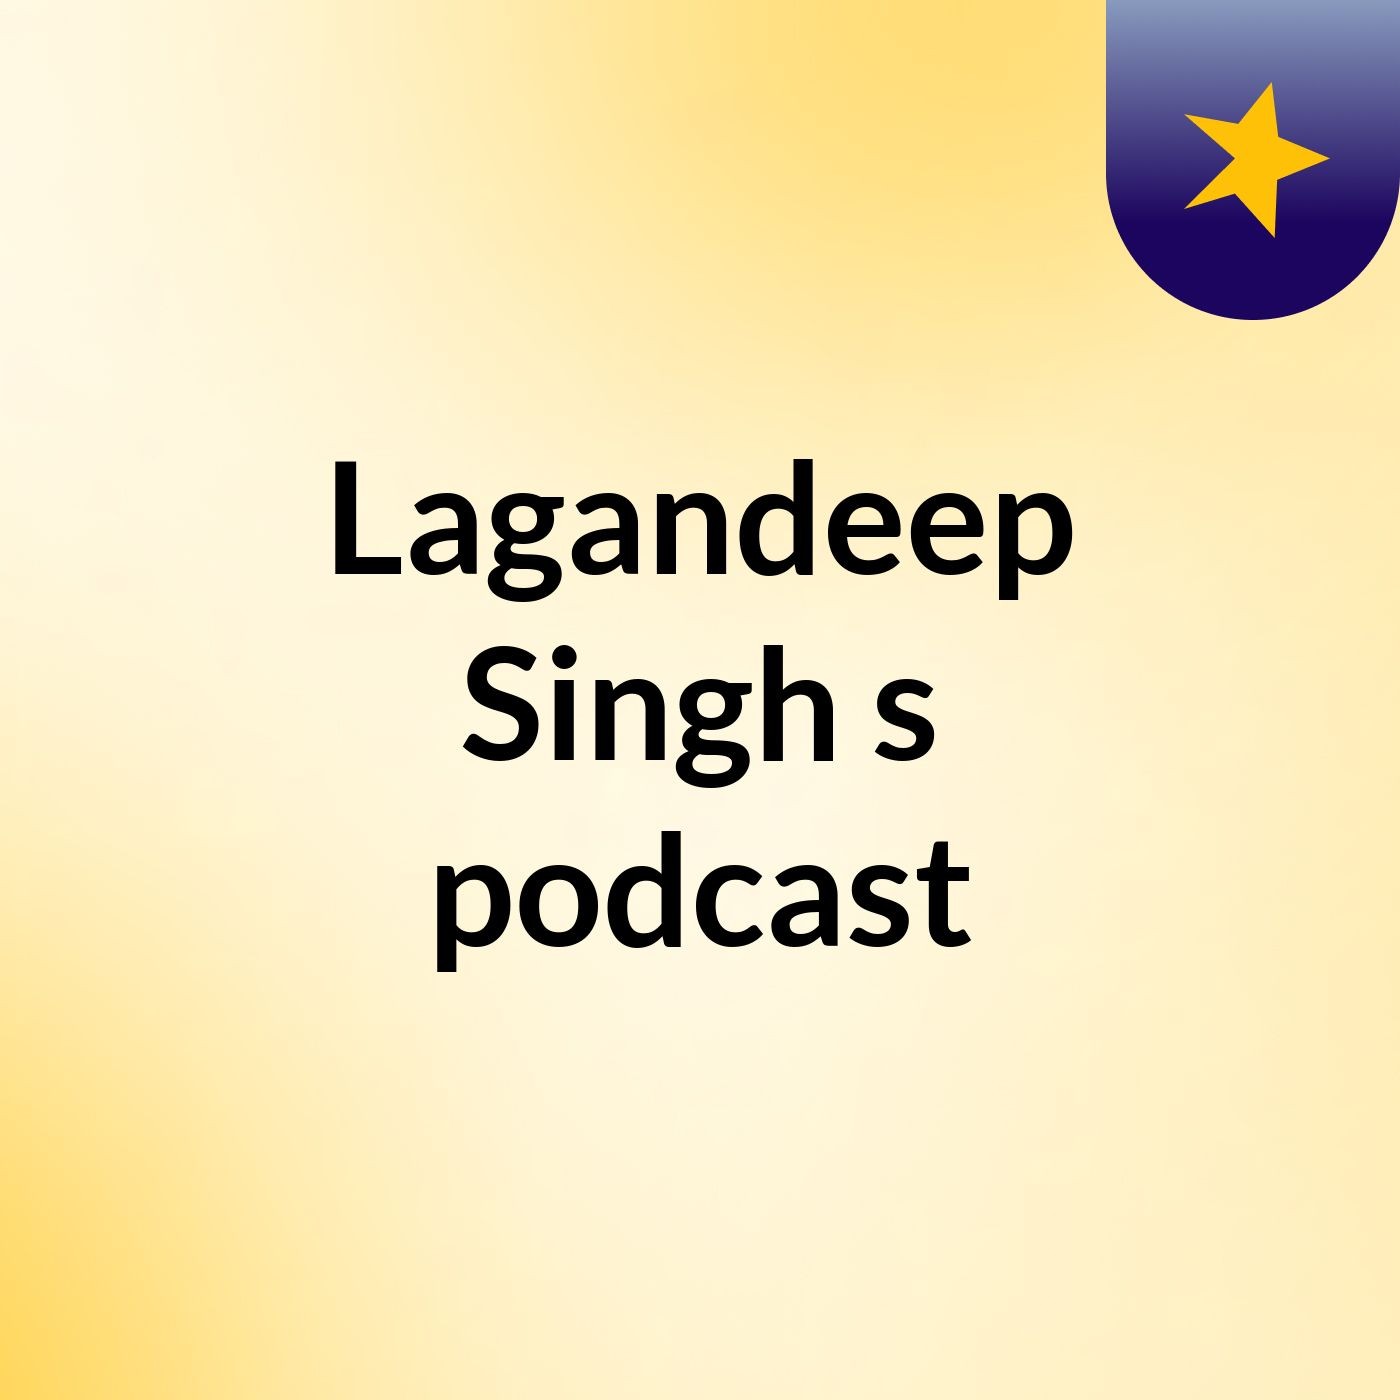 Lagandeep Singh's podcast